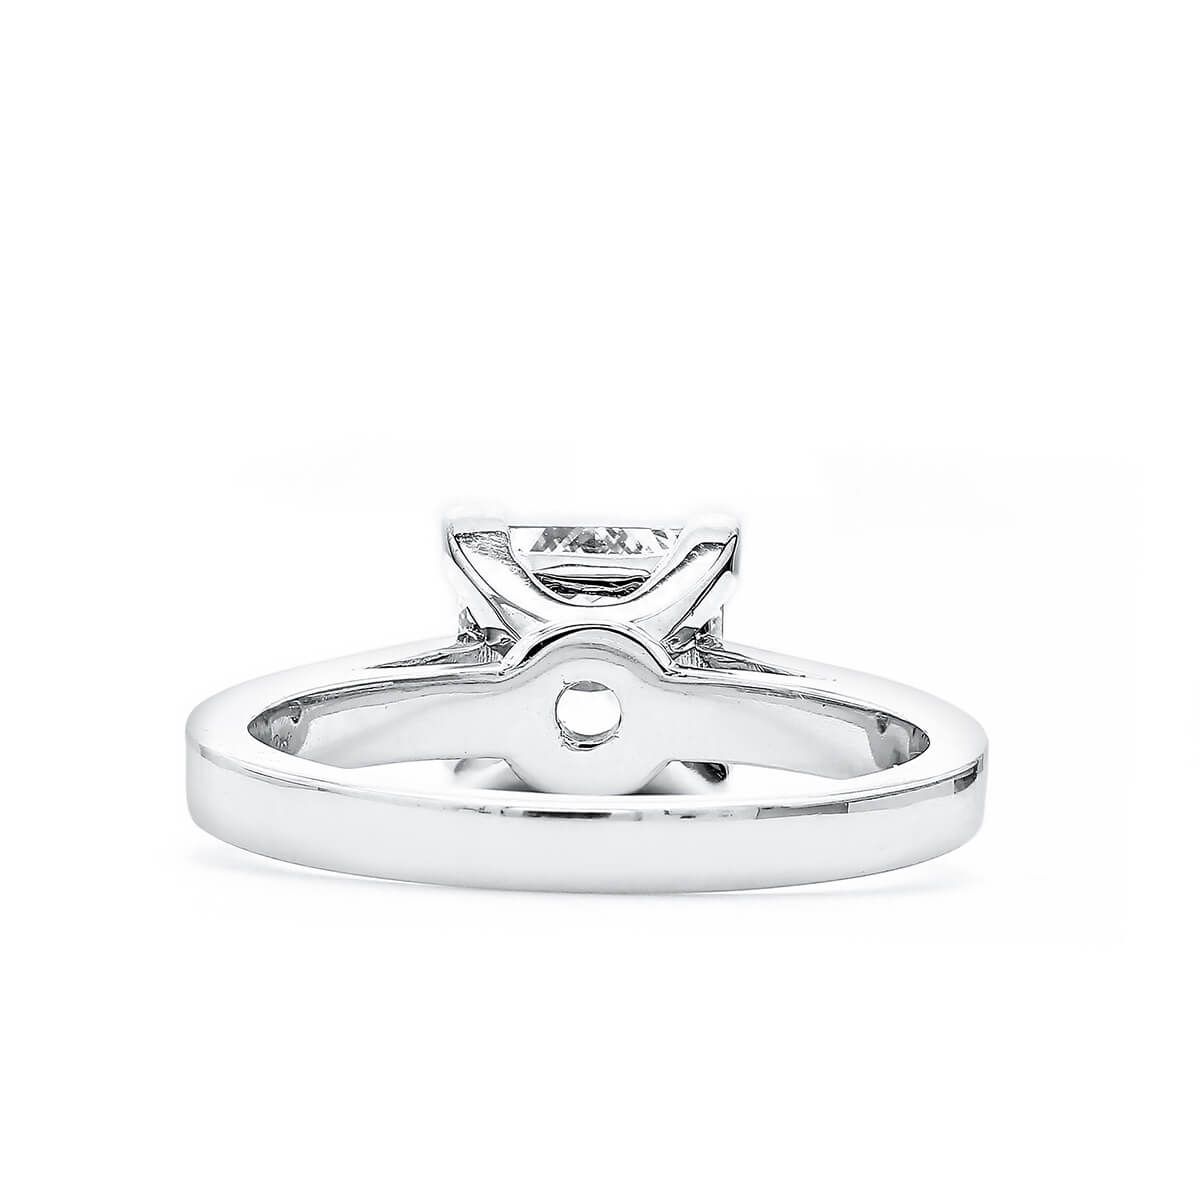  White Diamond Ring, 2.08 Ct. (2.37 Ct. TW), Princess shape, GIA Certified, 6242941107